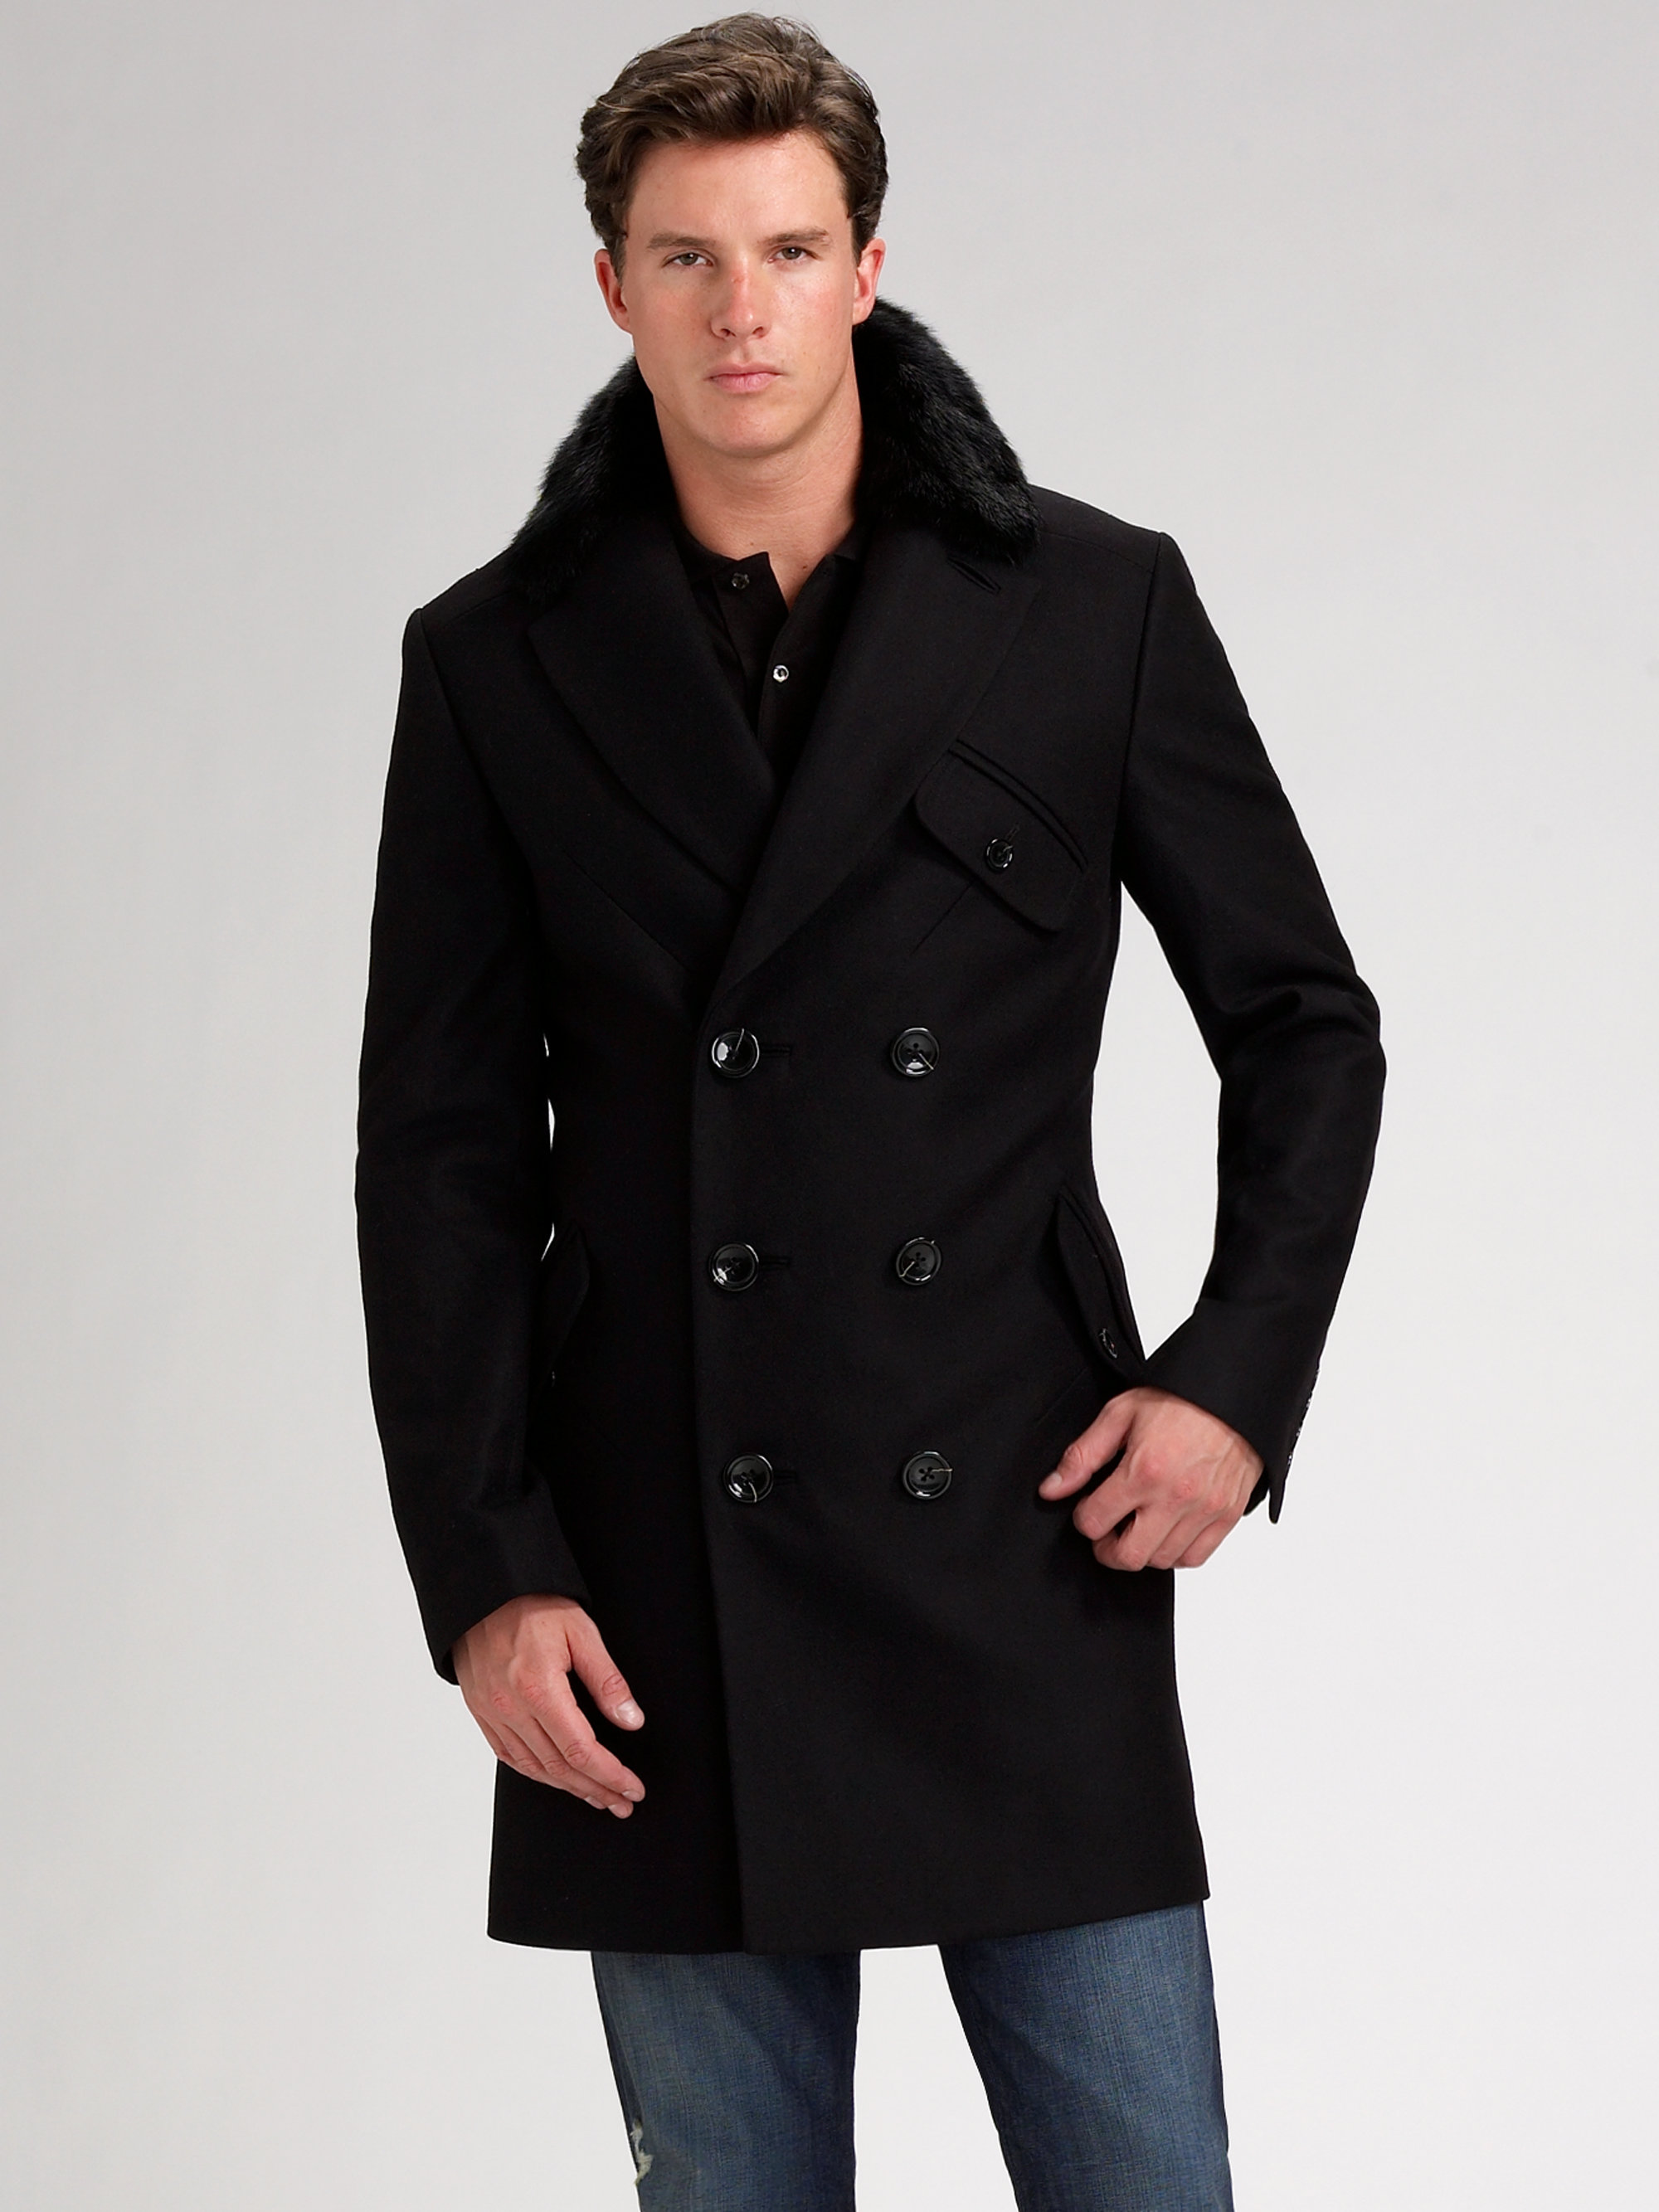 Lyst - Rock & Republic Furtrim Bogart Coat in Black for Men